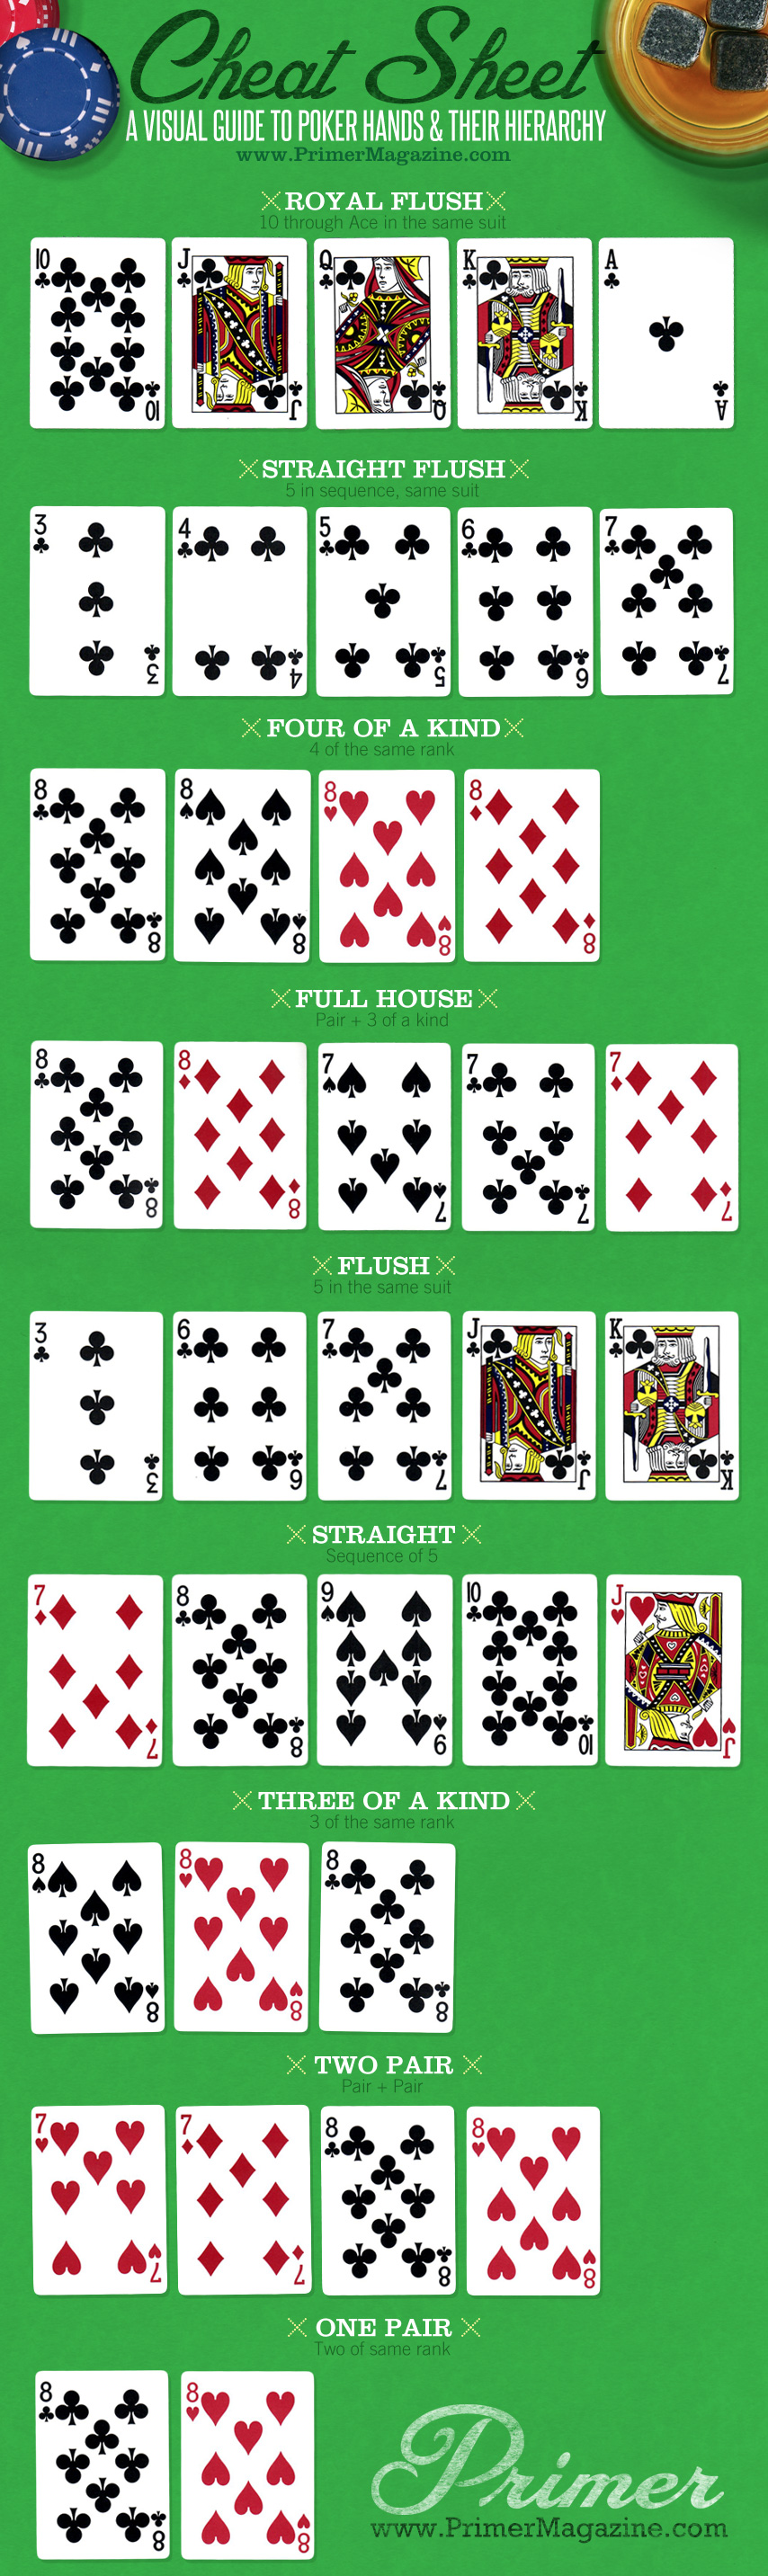 A Visual Guide to Poker Hands \u0026 Descriptions